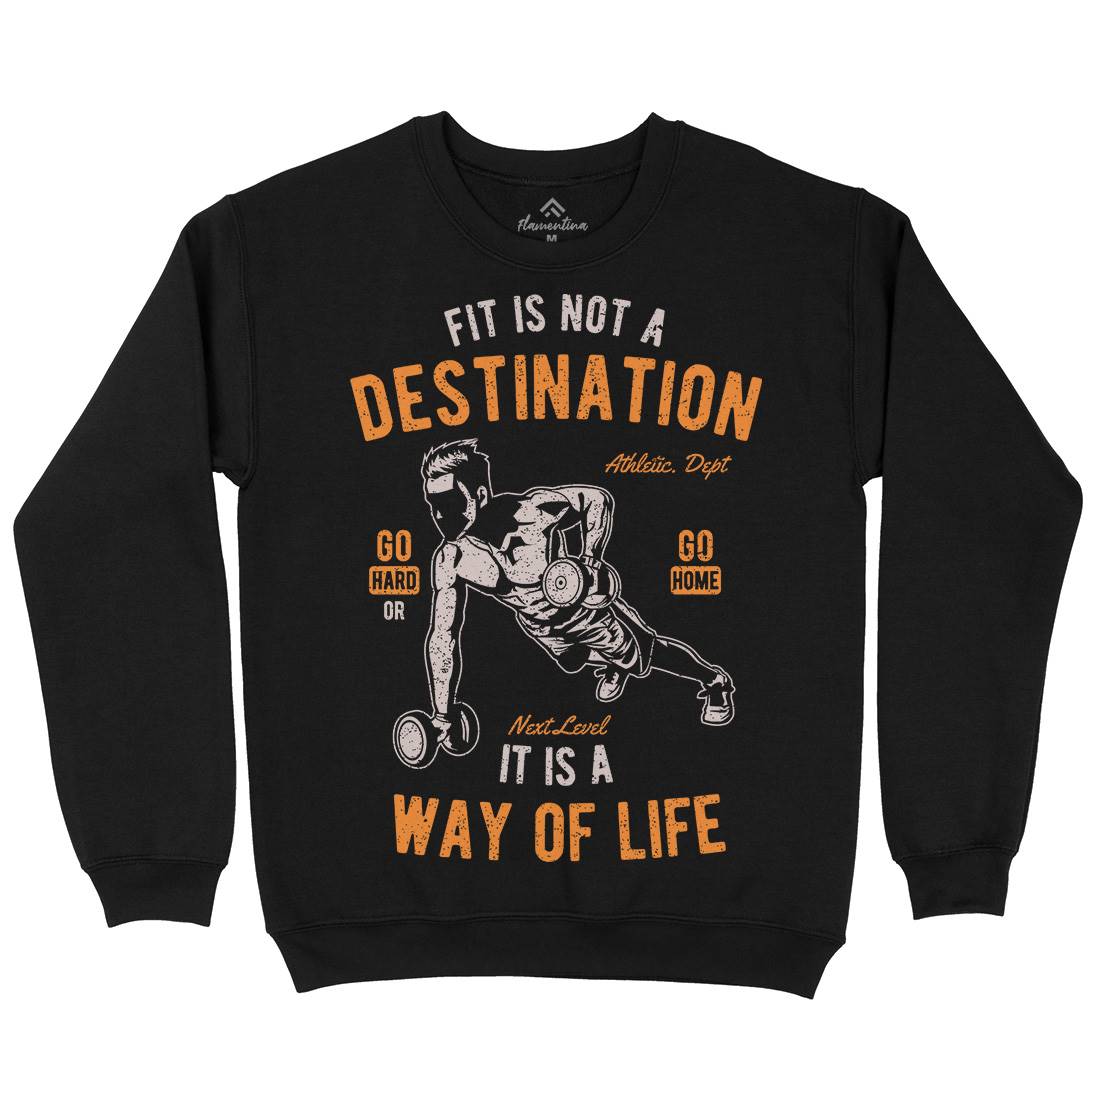 Fit Is Not A Destination Kids Crew Neck Sweatshirt Gym A663